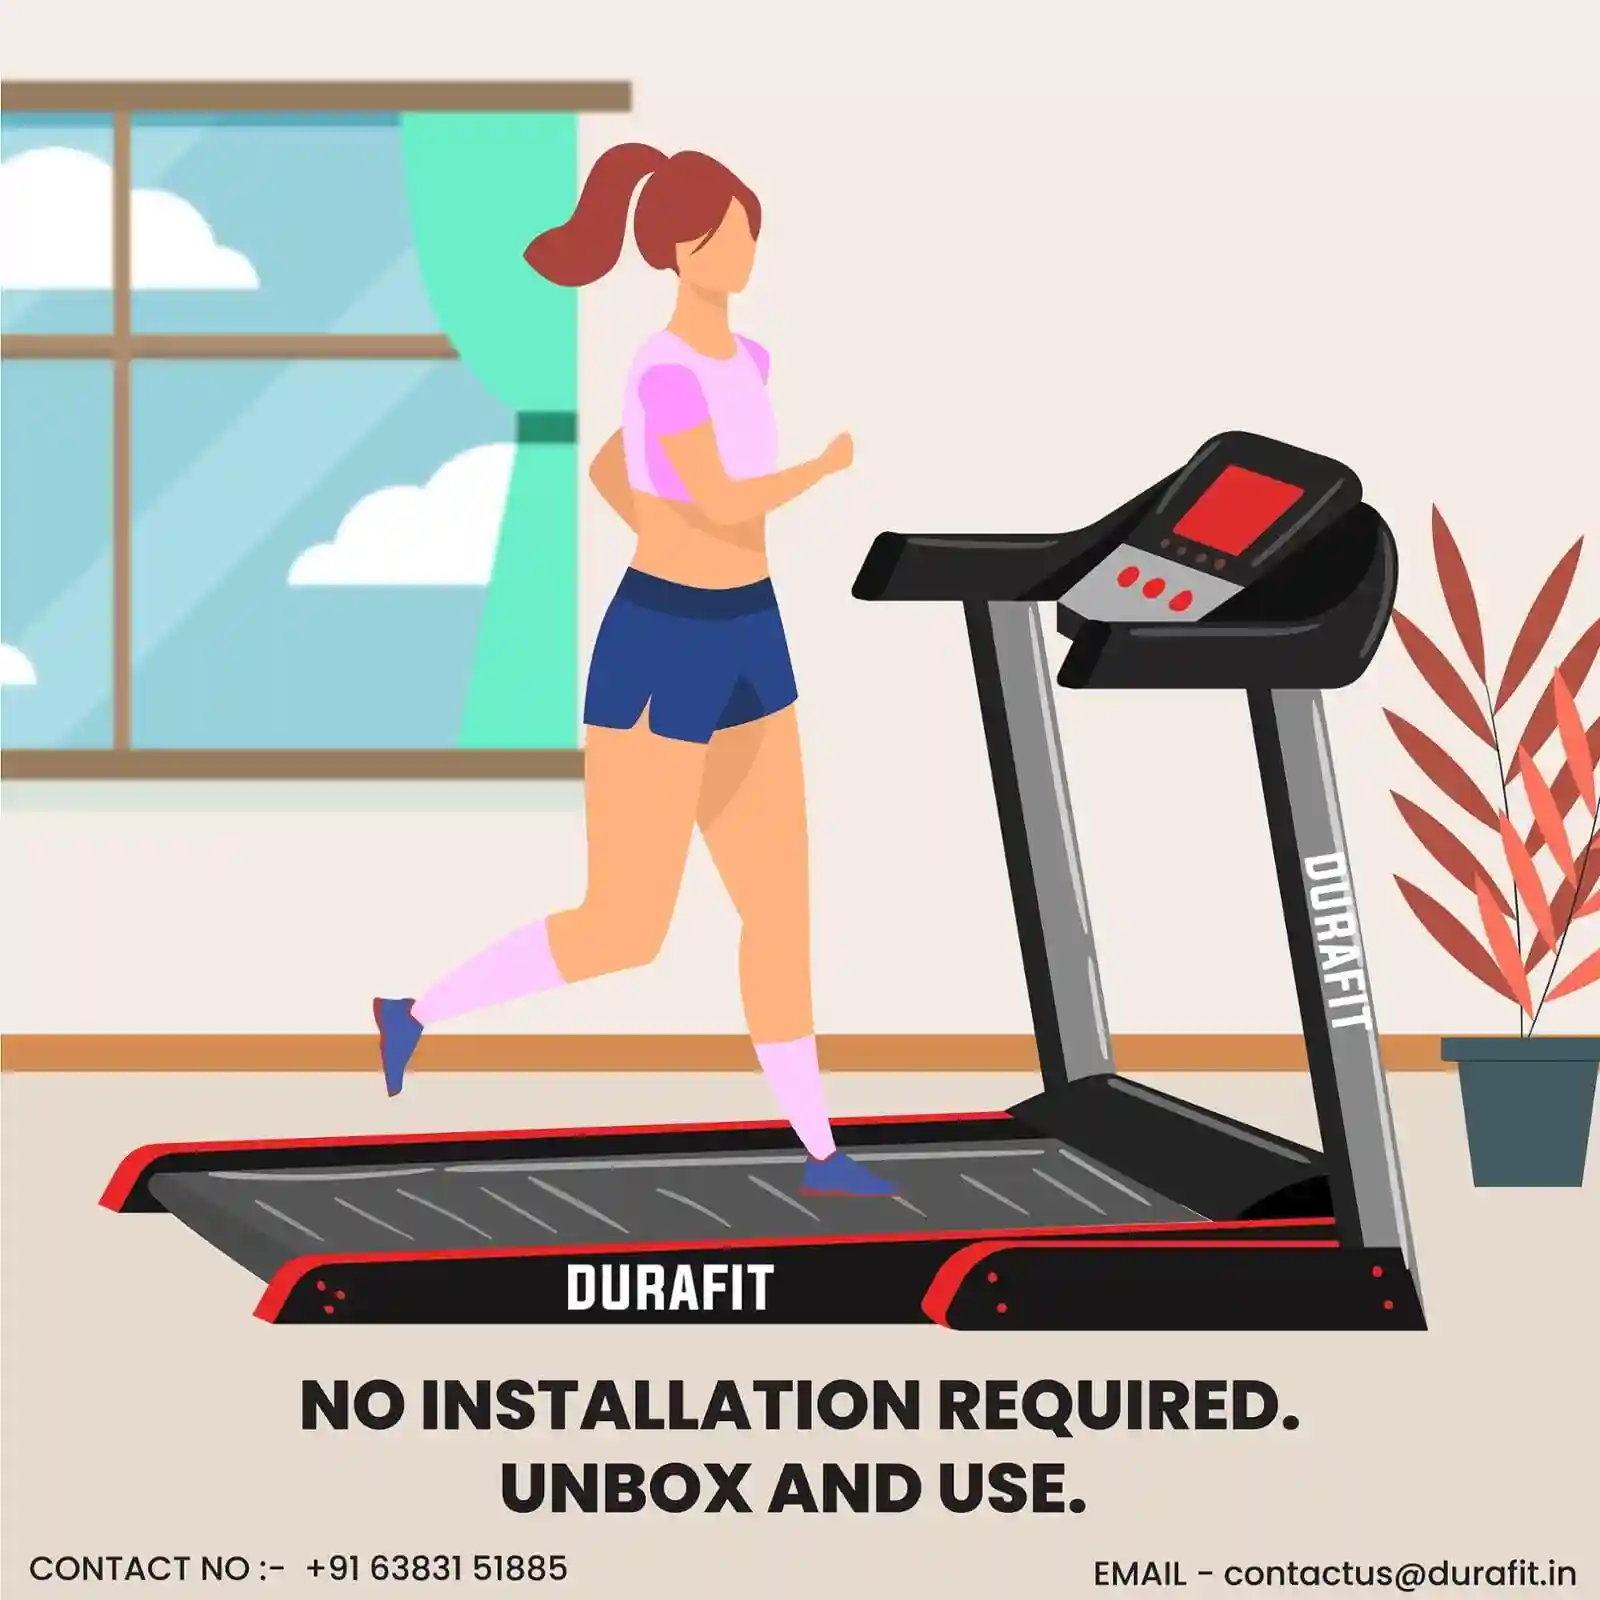 Durafit Efficio Black installation free treadmill